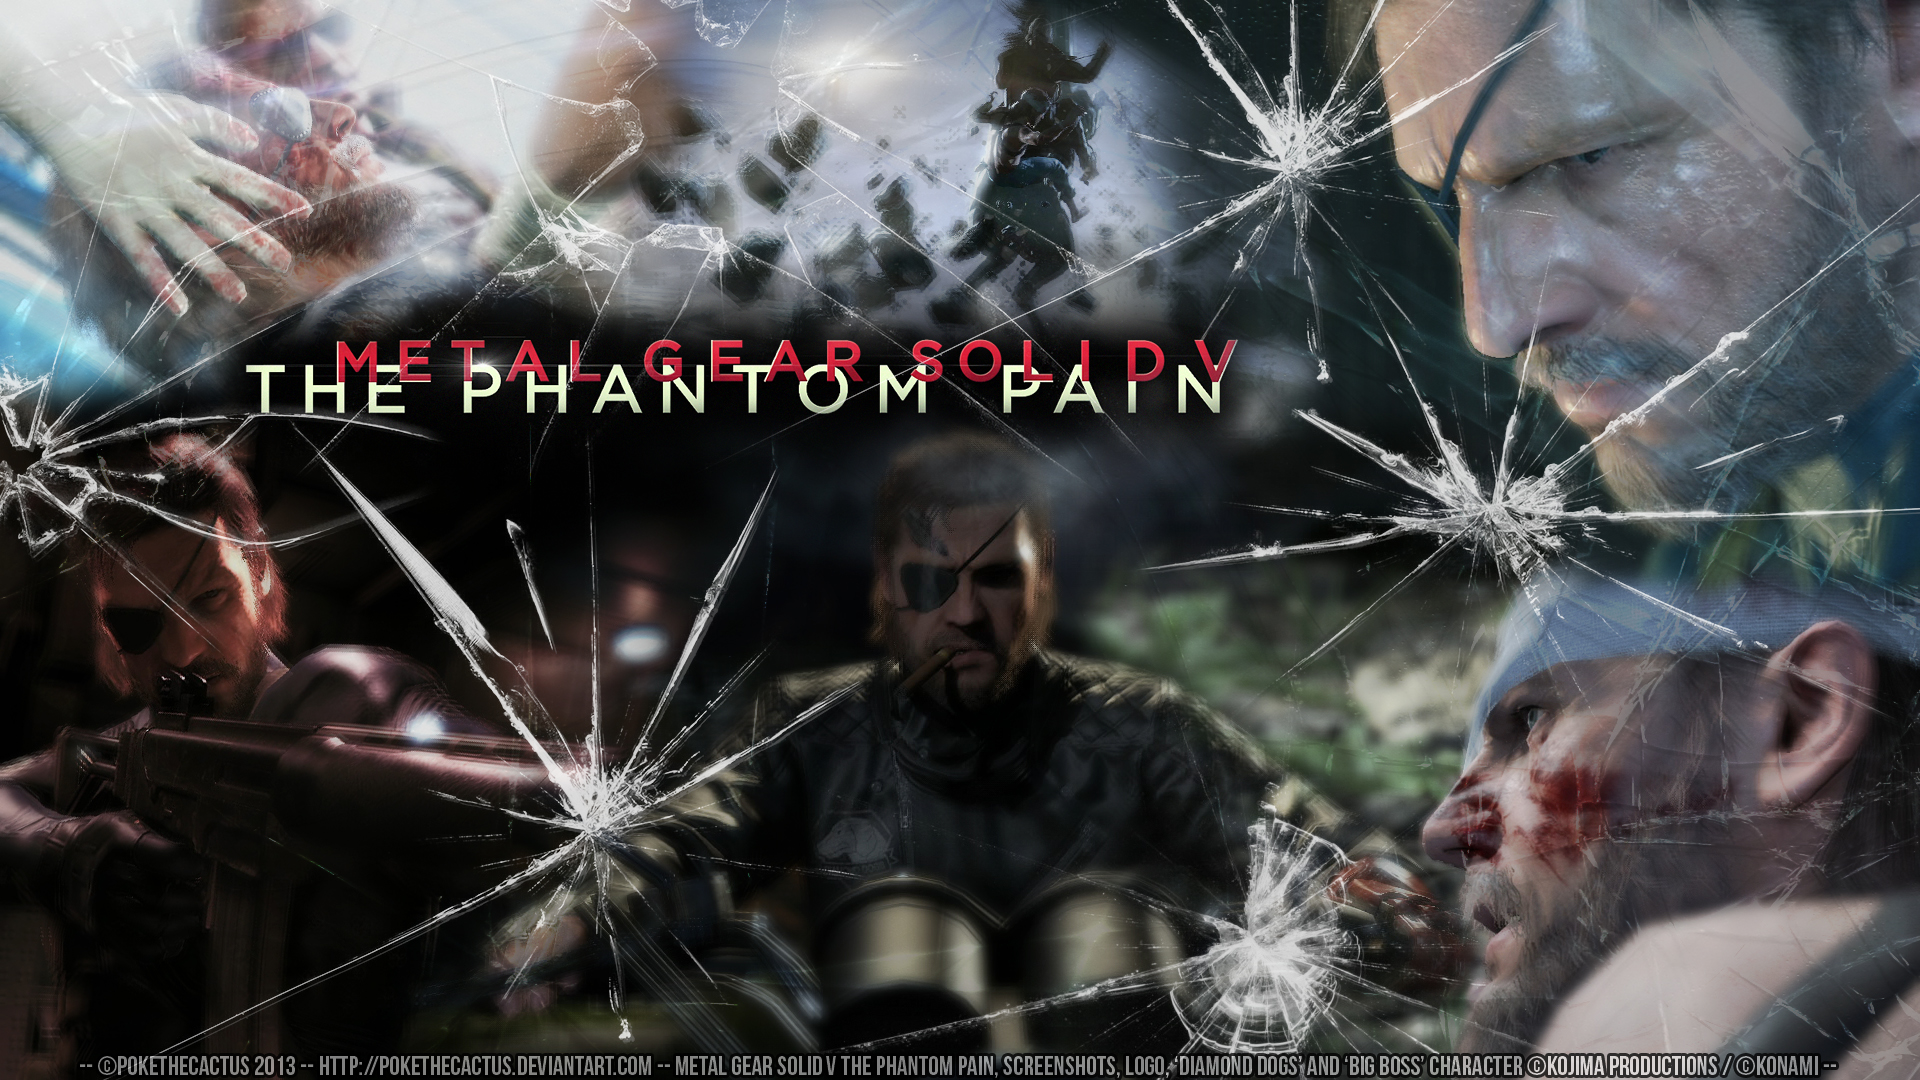 Metal Gear Solid V The Phantom Pain [PS4]